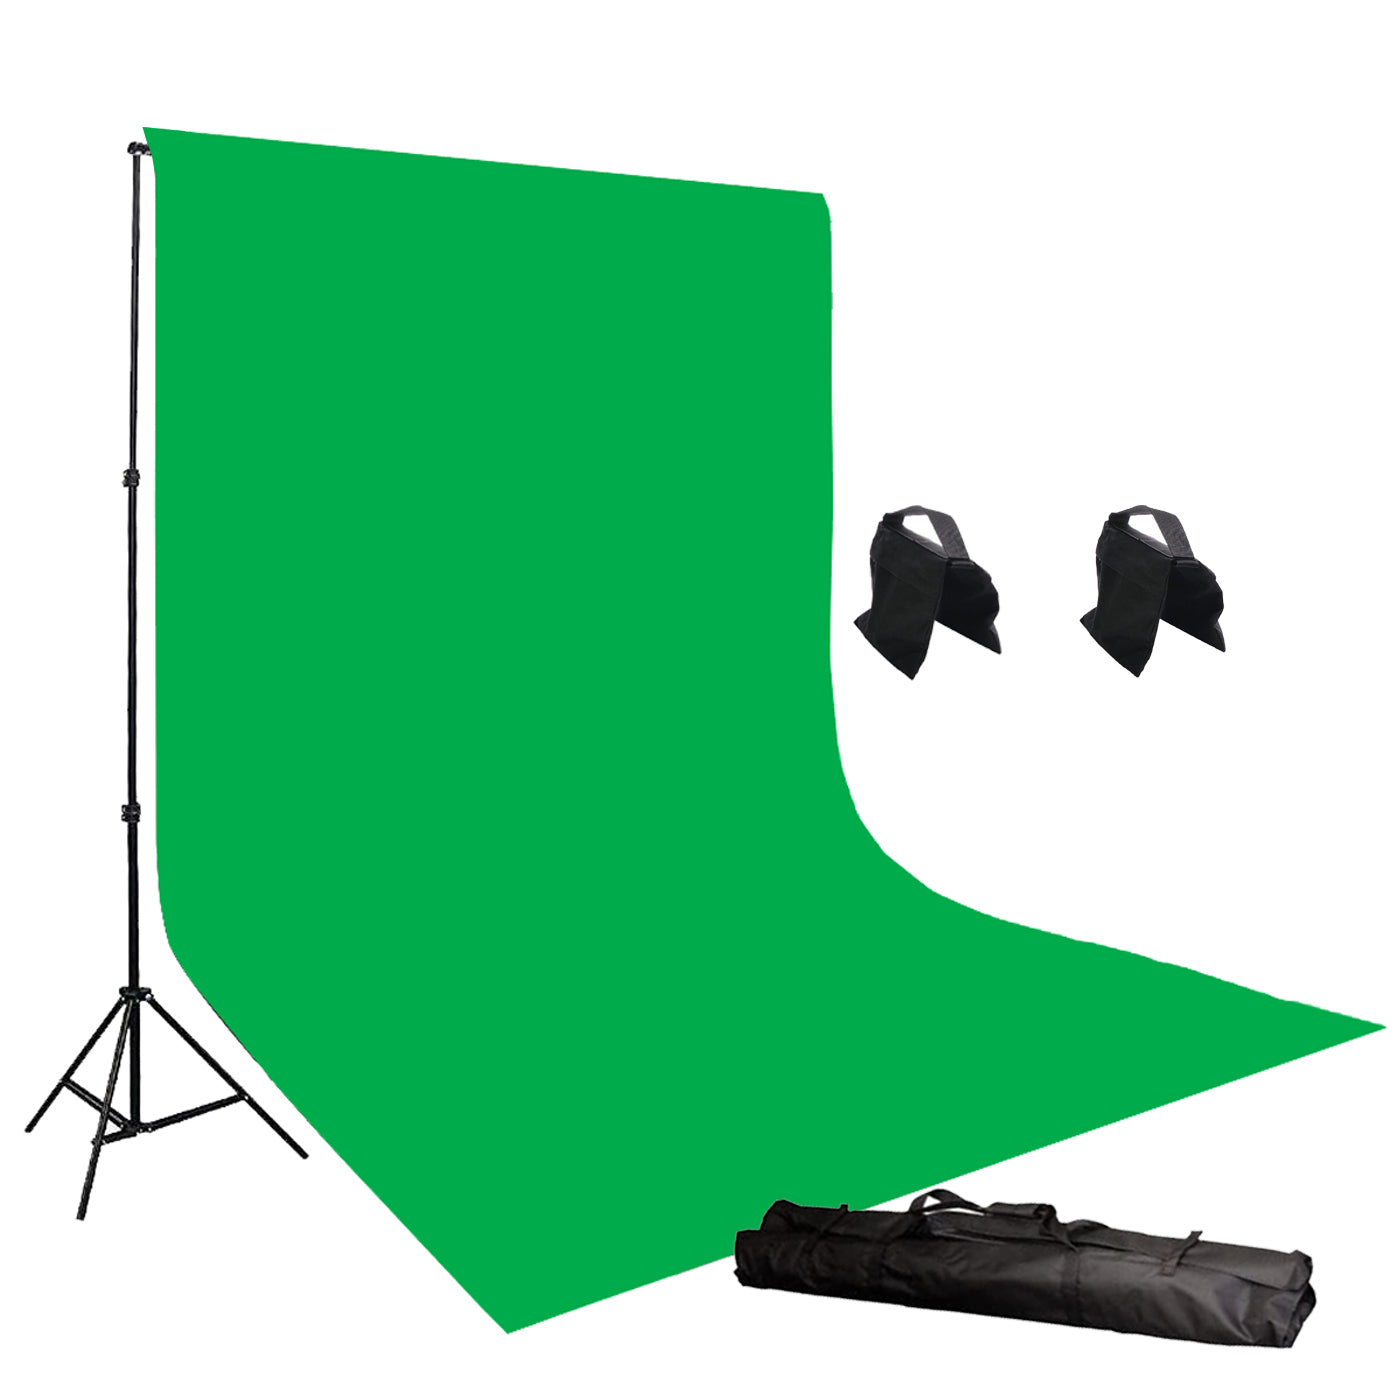 6' x 9' Chroma Key Green Screen Photography Video Chromakey Backdrop Background Stands & 2 sandbags H804-69G2S